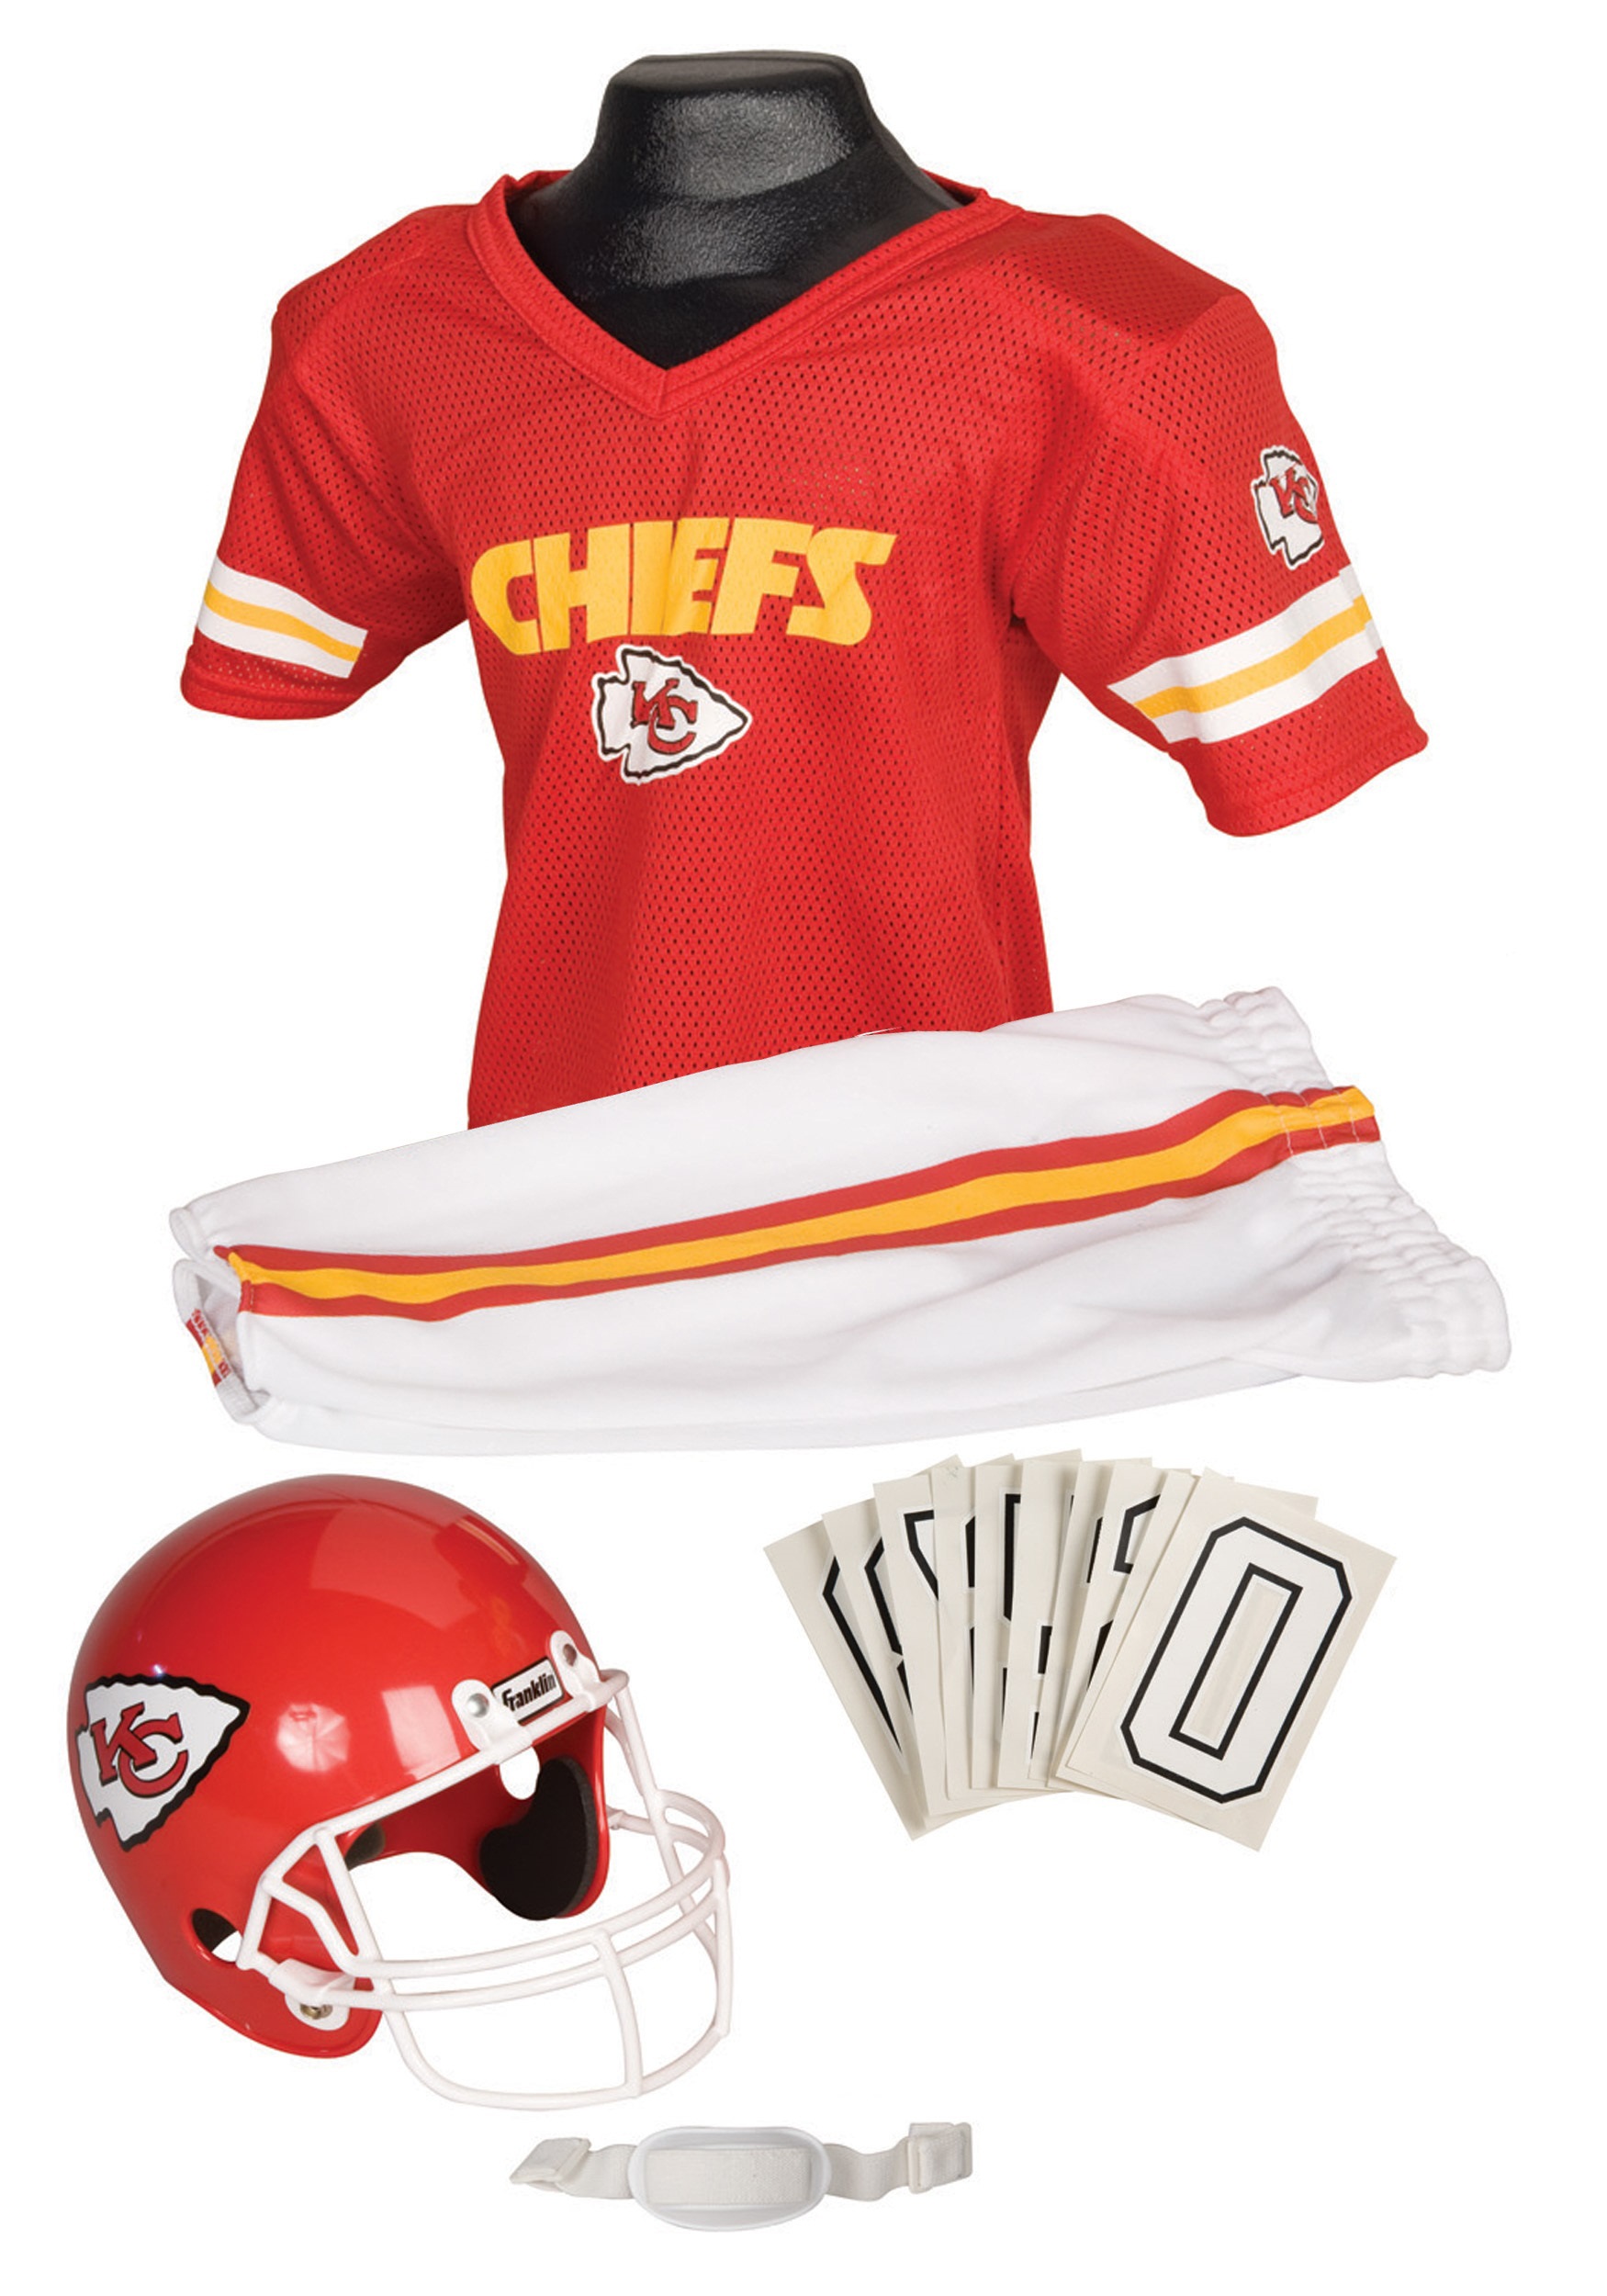 Kids NFL Chiefs Uniform Costume